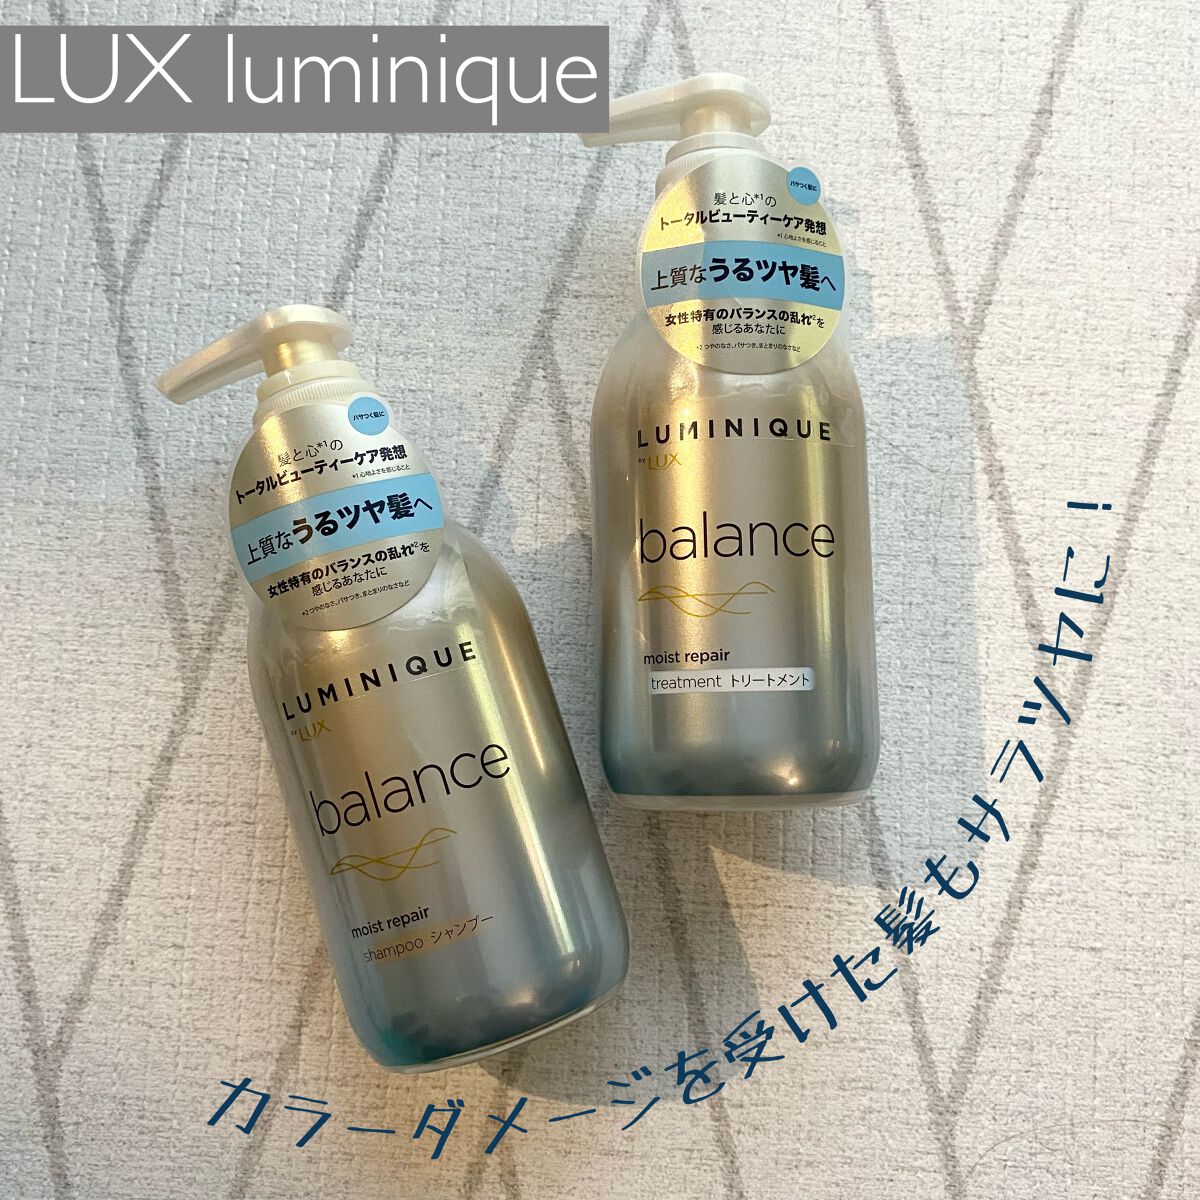 LUX ルミニーク バランス モイストリペア コンディショナー2袋